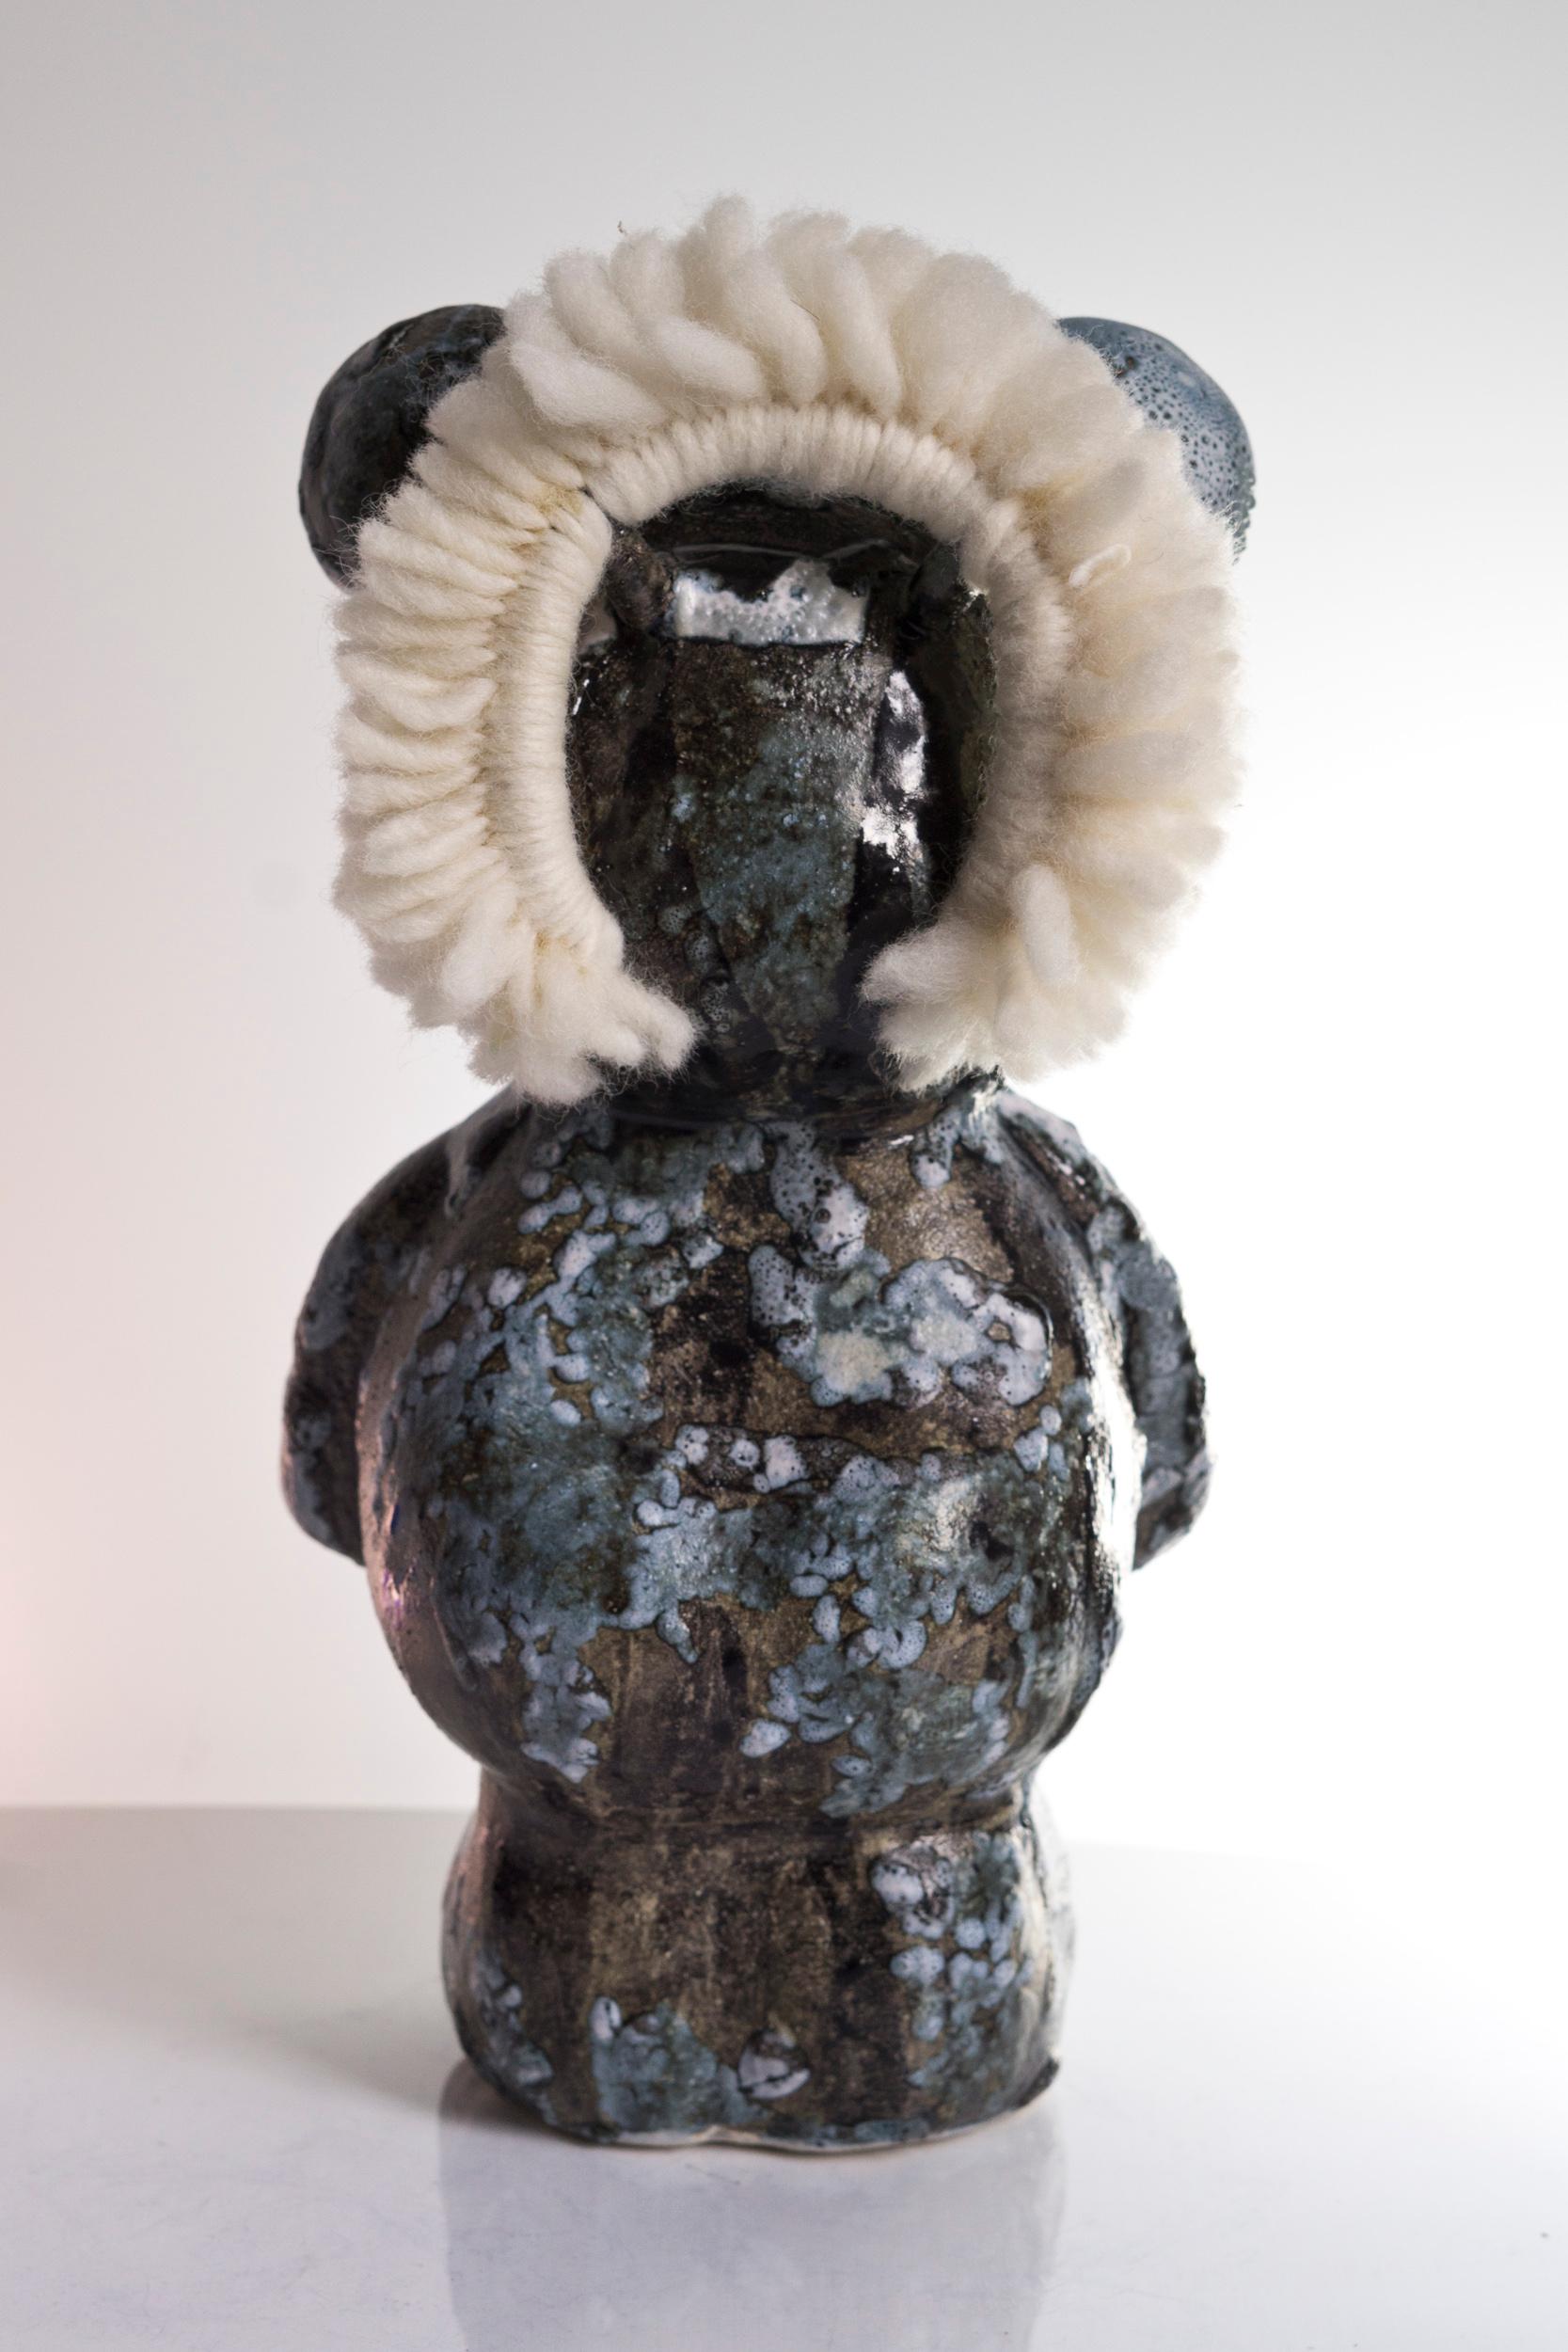 The Warrior Teddy - Modern Sculpture by Agustina Garrigou